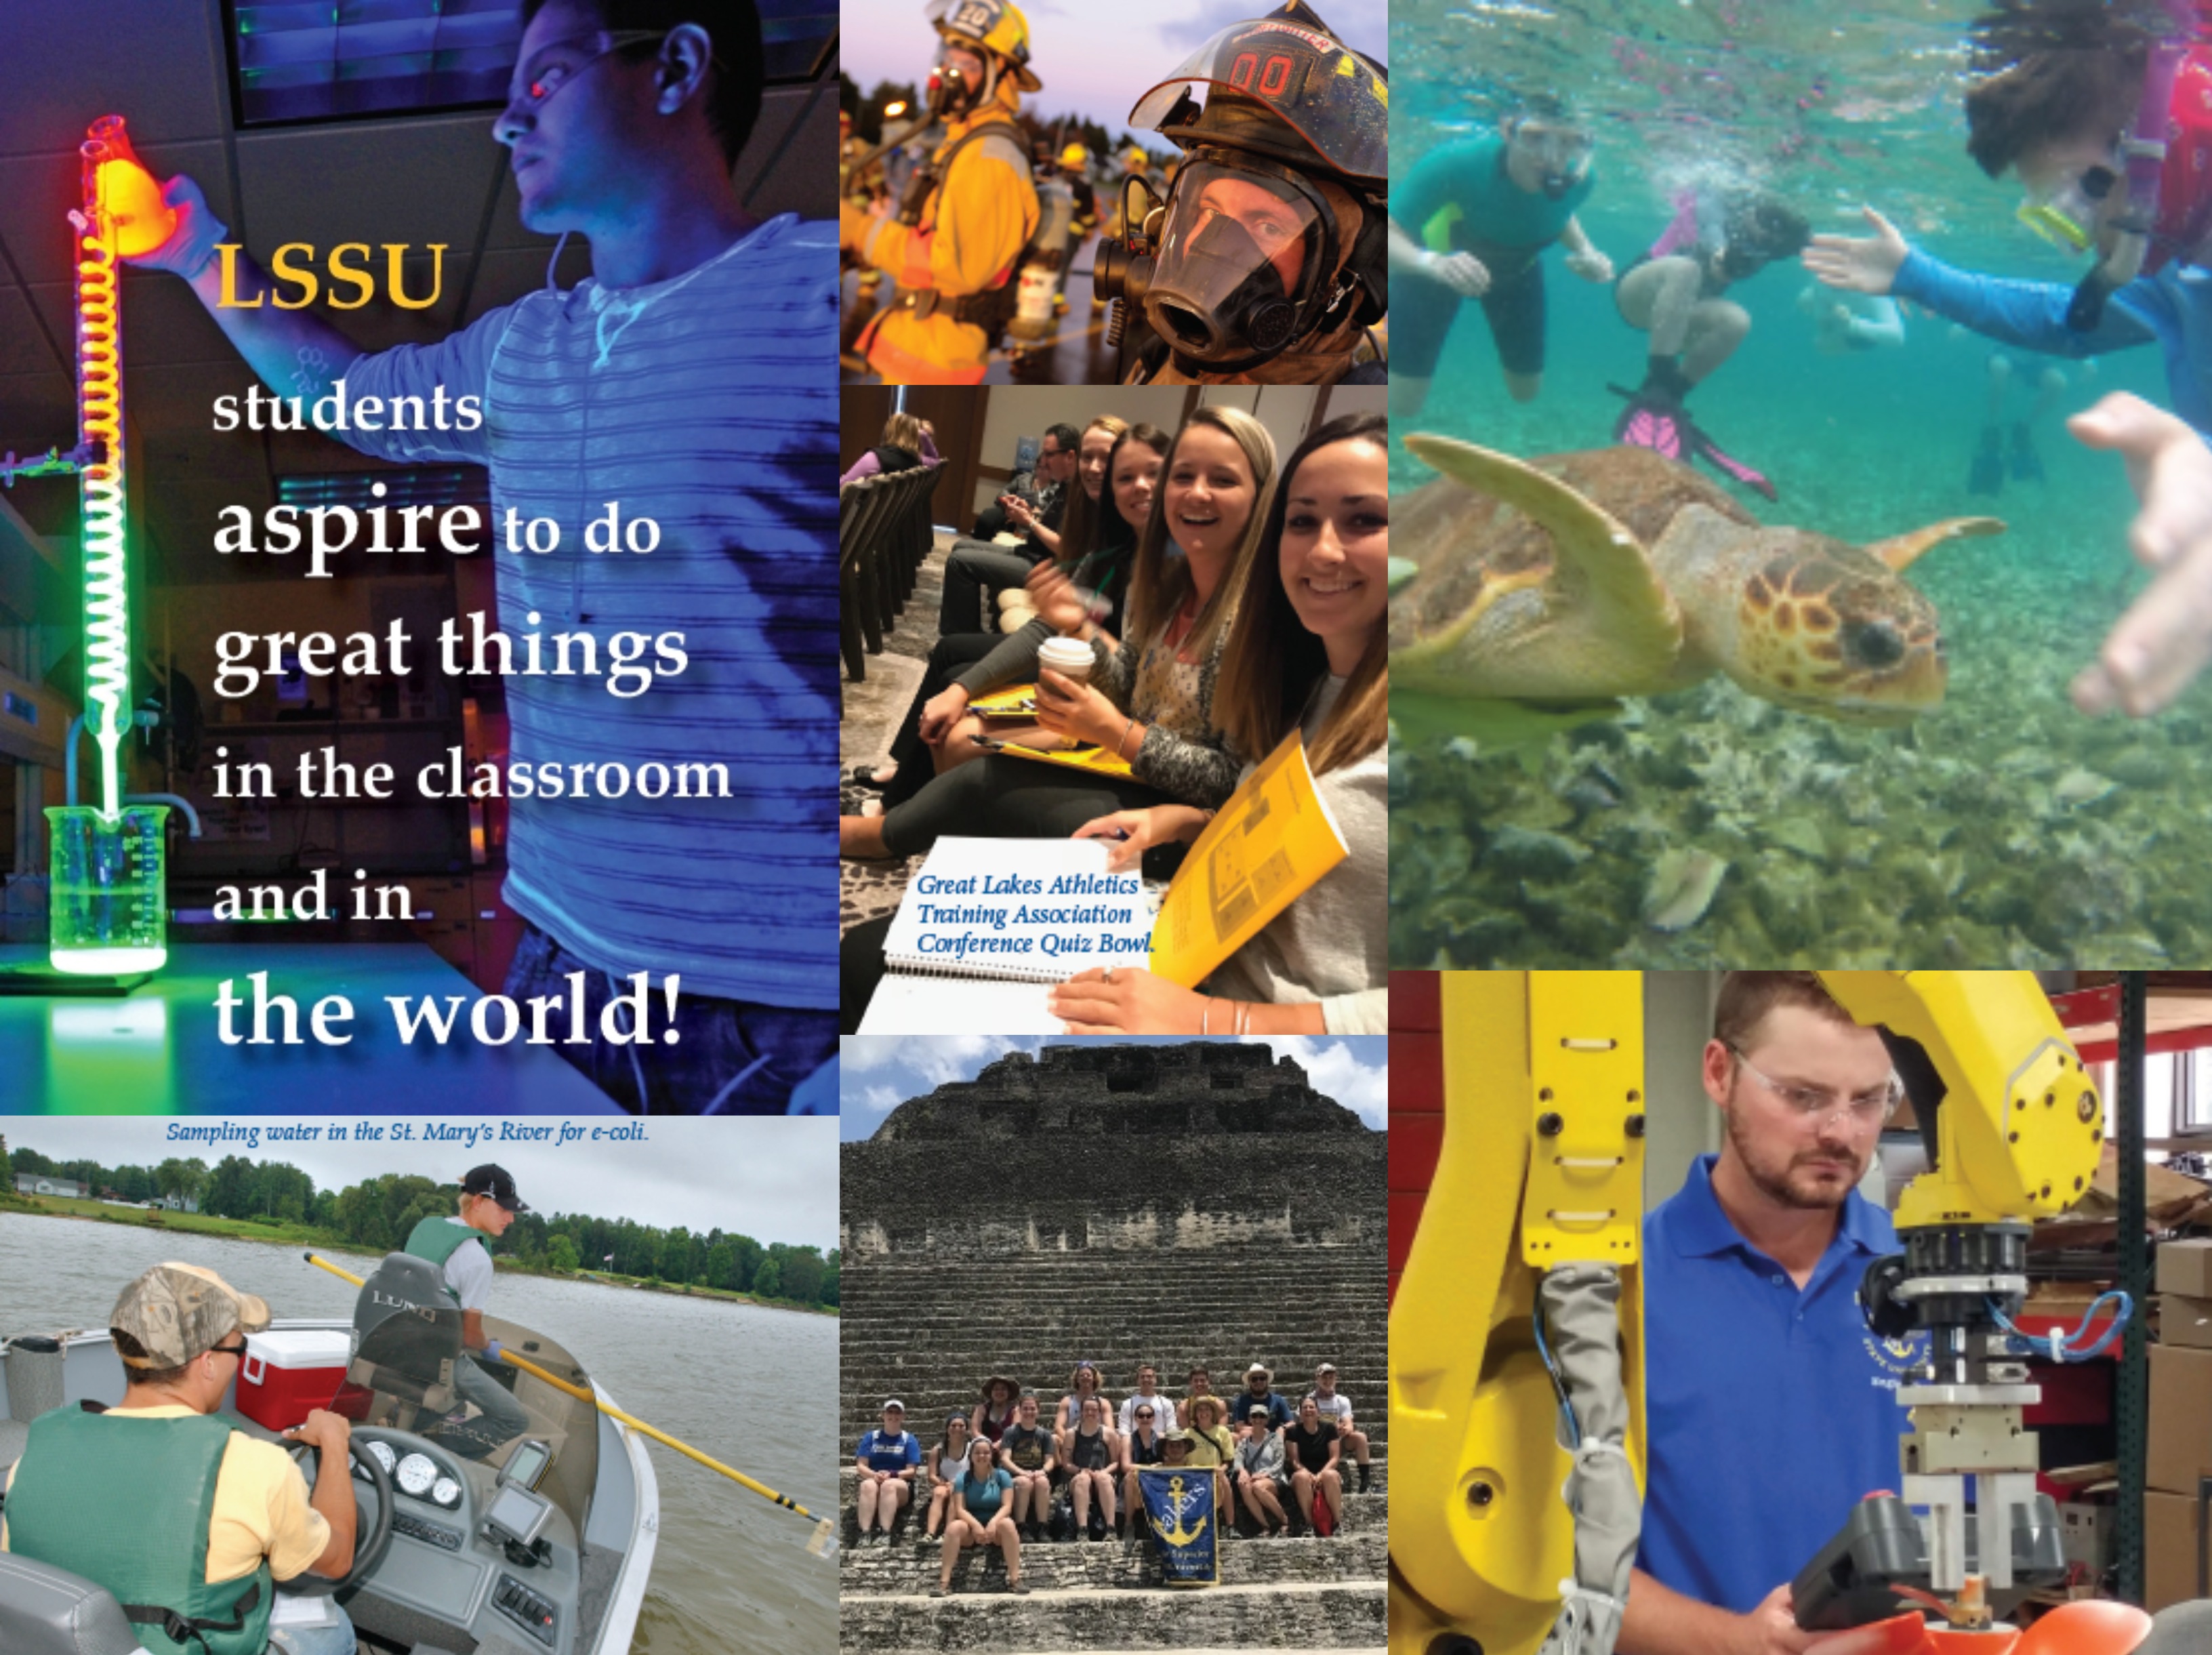 LSSU students around the world